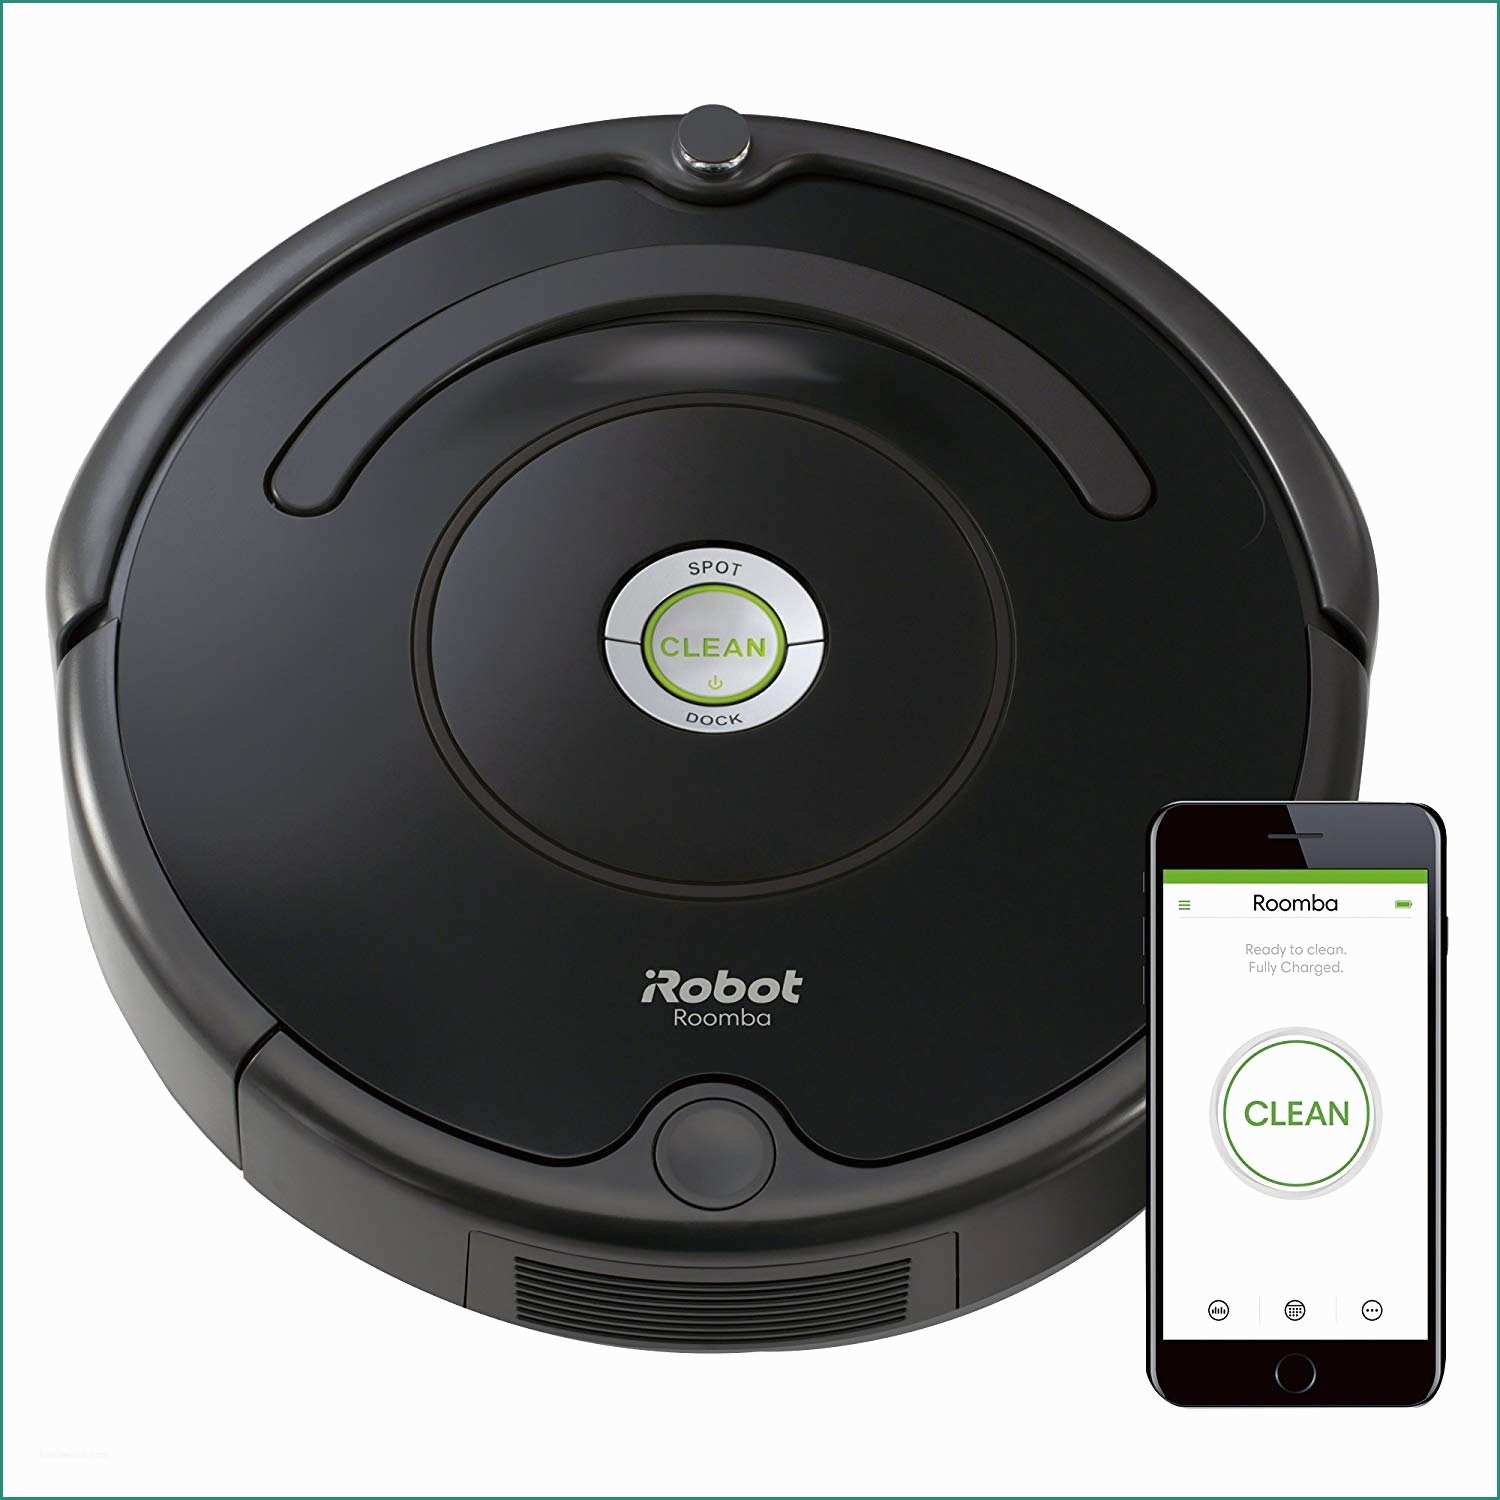 Roomba Recensioni E Amazon Irobot Roomba 671 Robot Vacuum with Wi Fi Connectivity